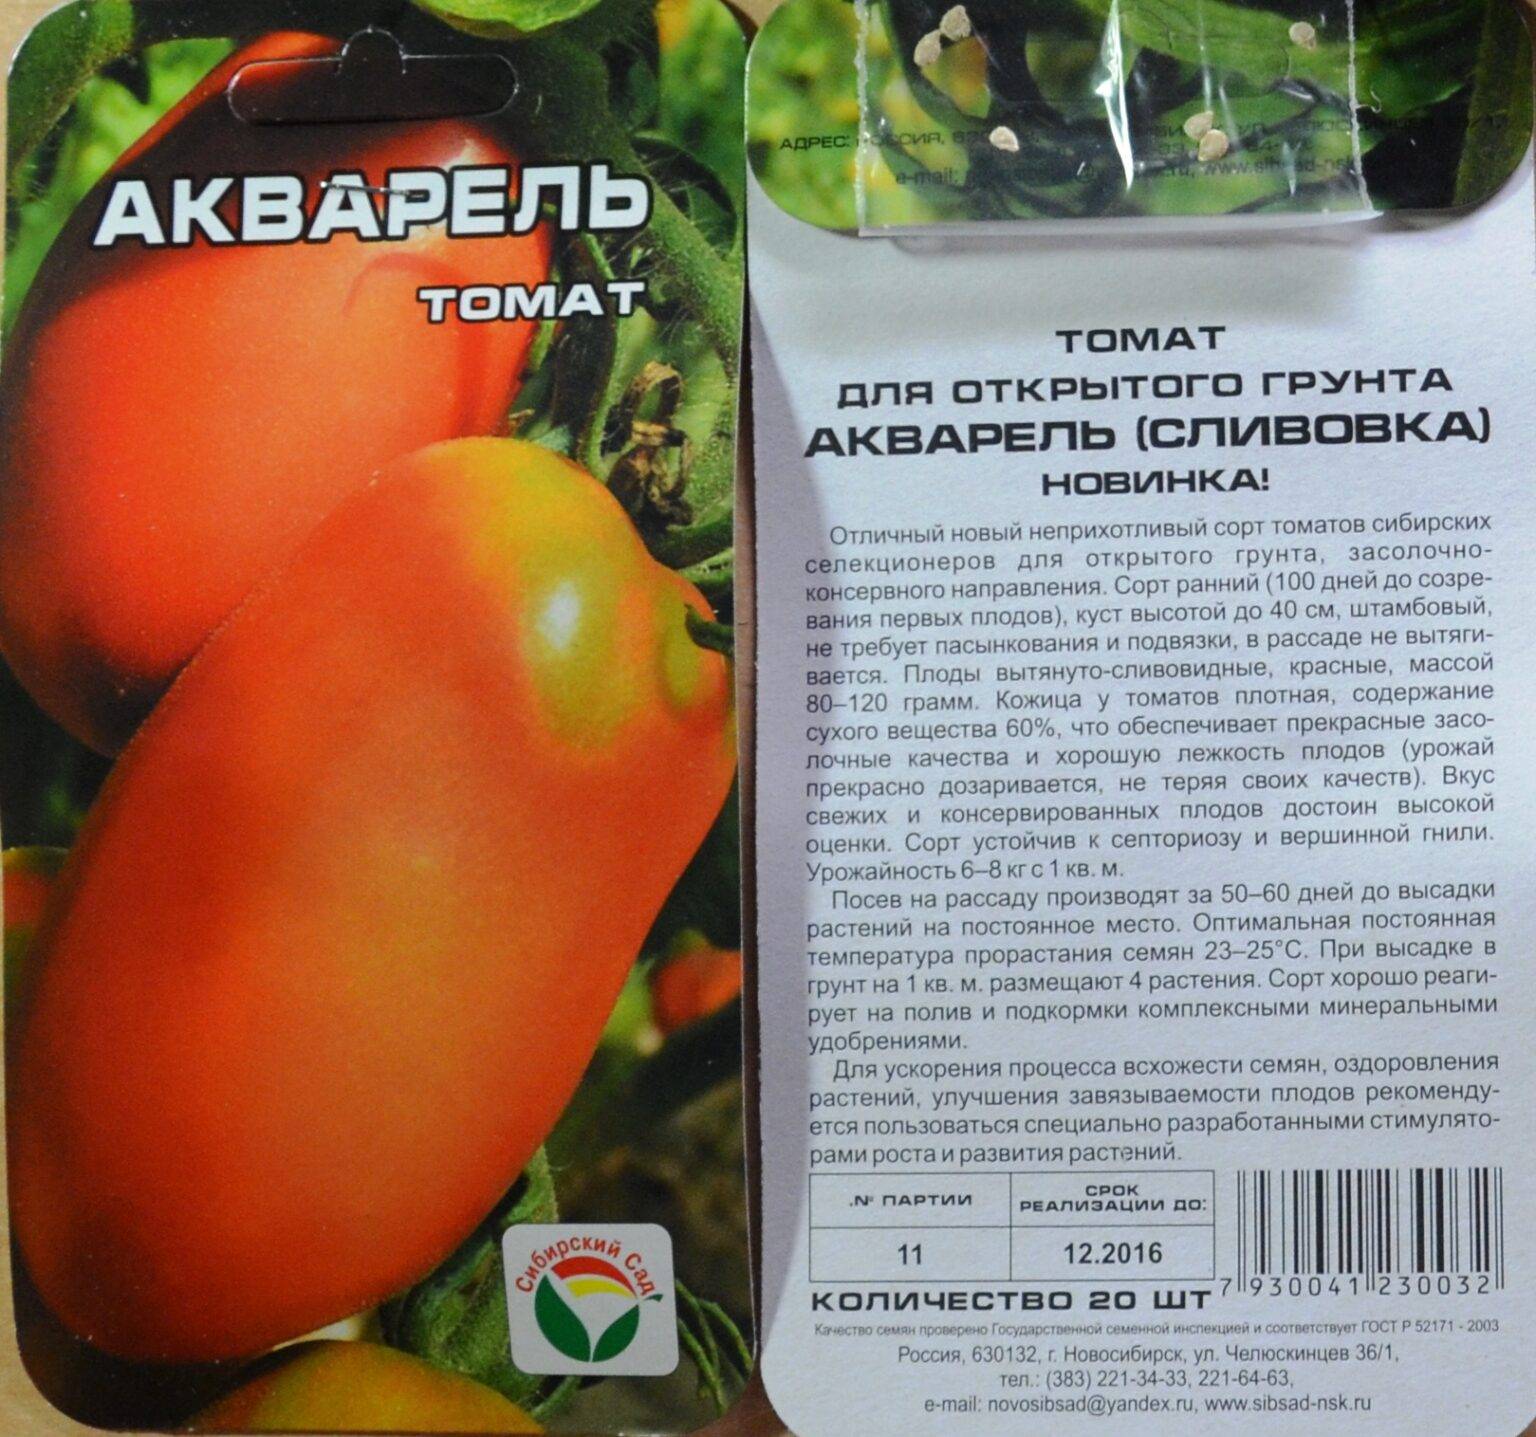 Описание томата Акварель, характеристика плодов и особенности выращивания